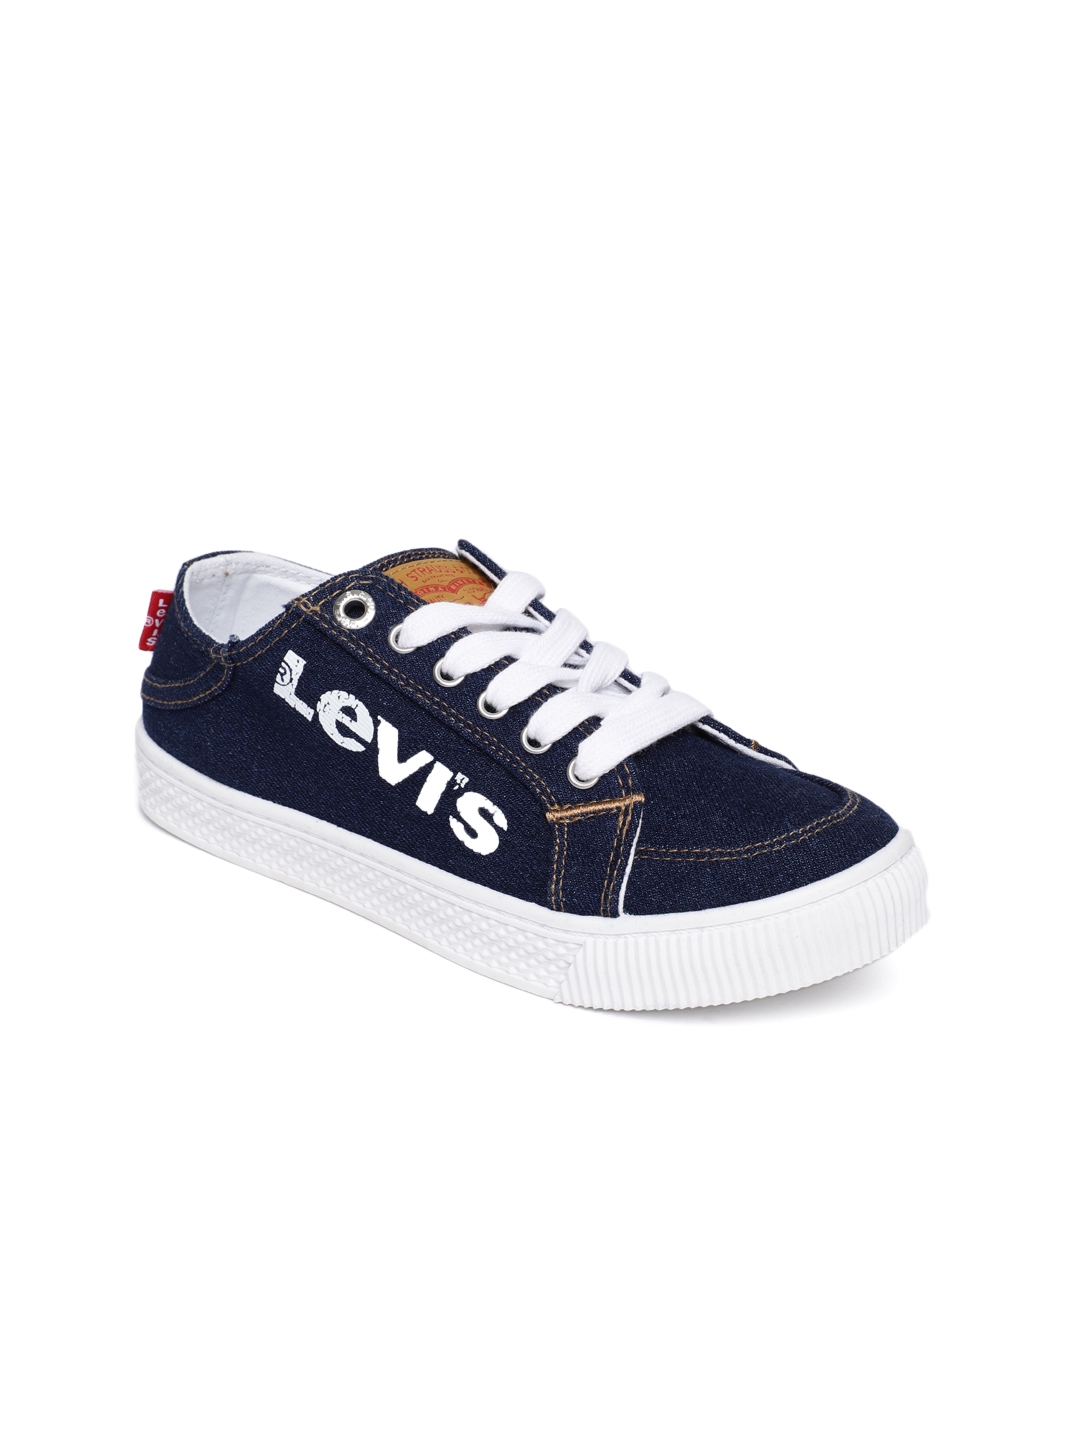 levis ladies slip on shoes